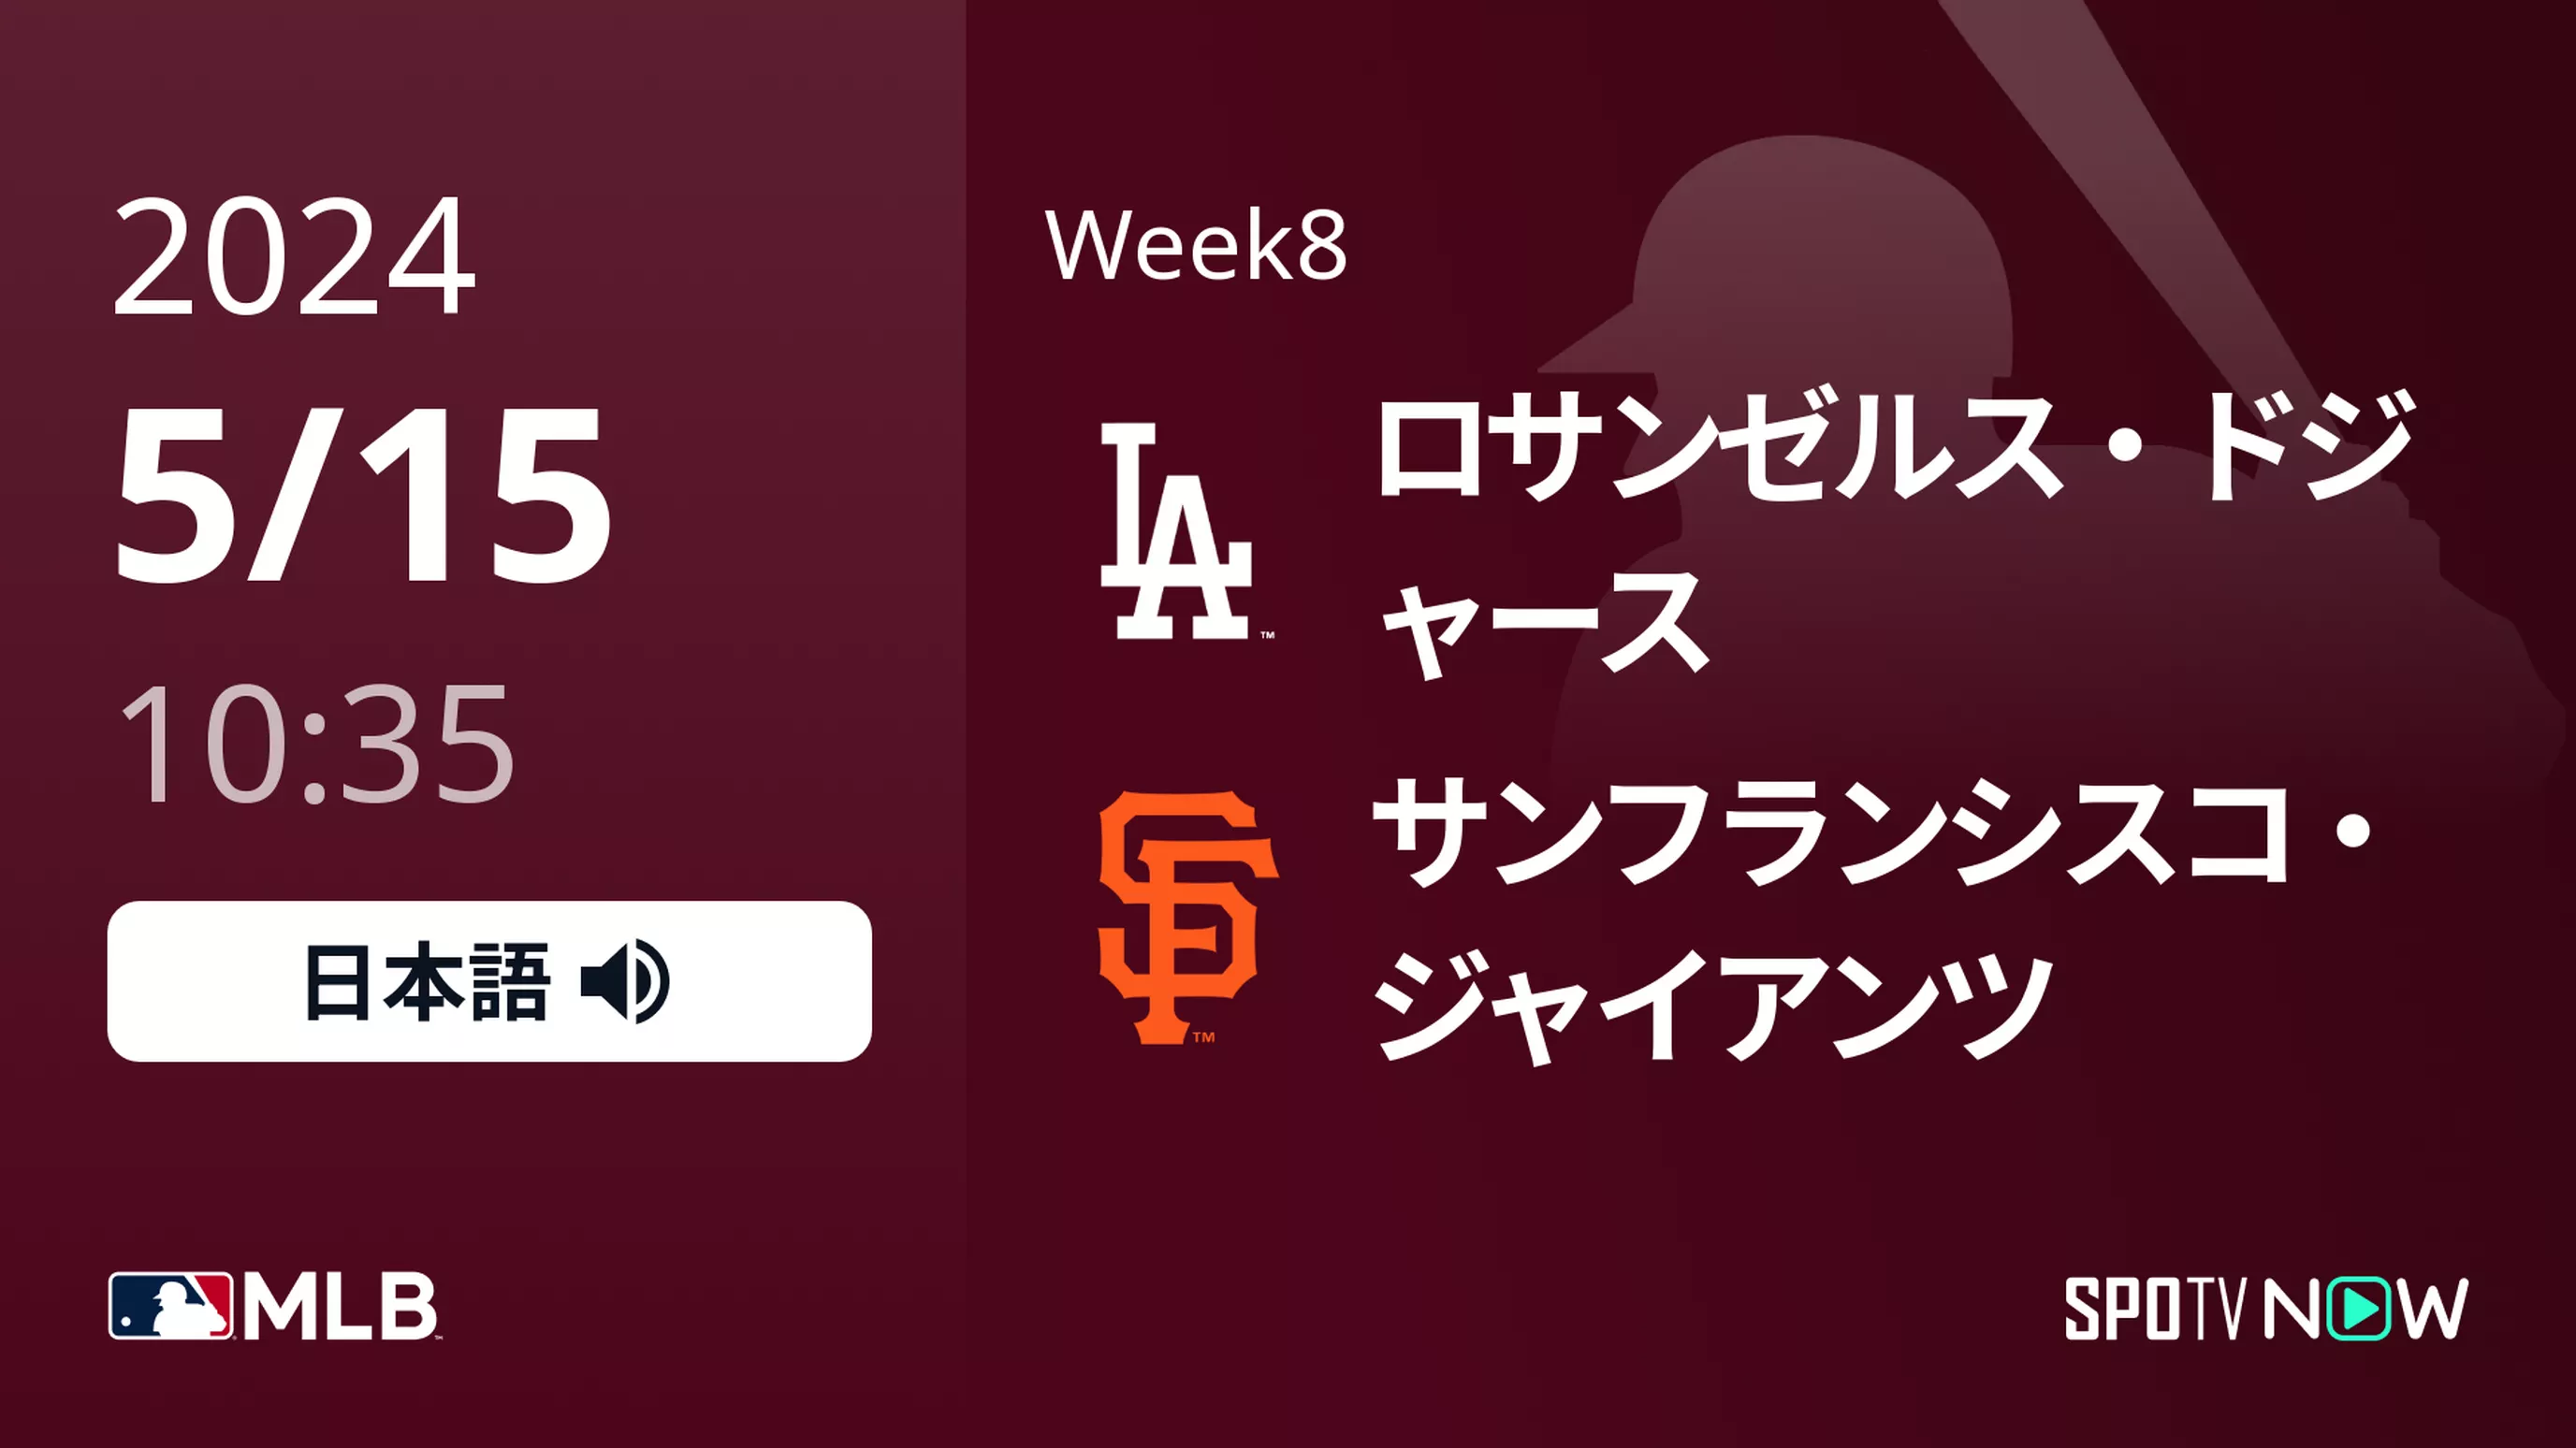 Week8 ドジャース vs ジャイアンツ 5/15[MLB]